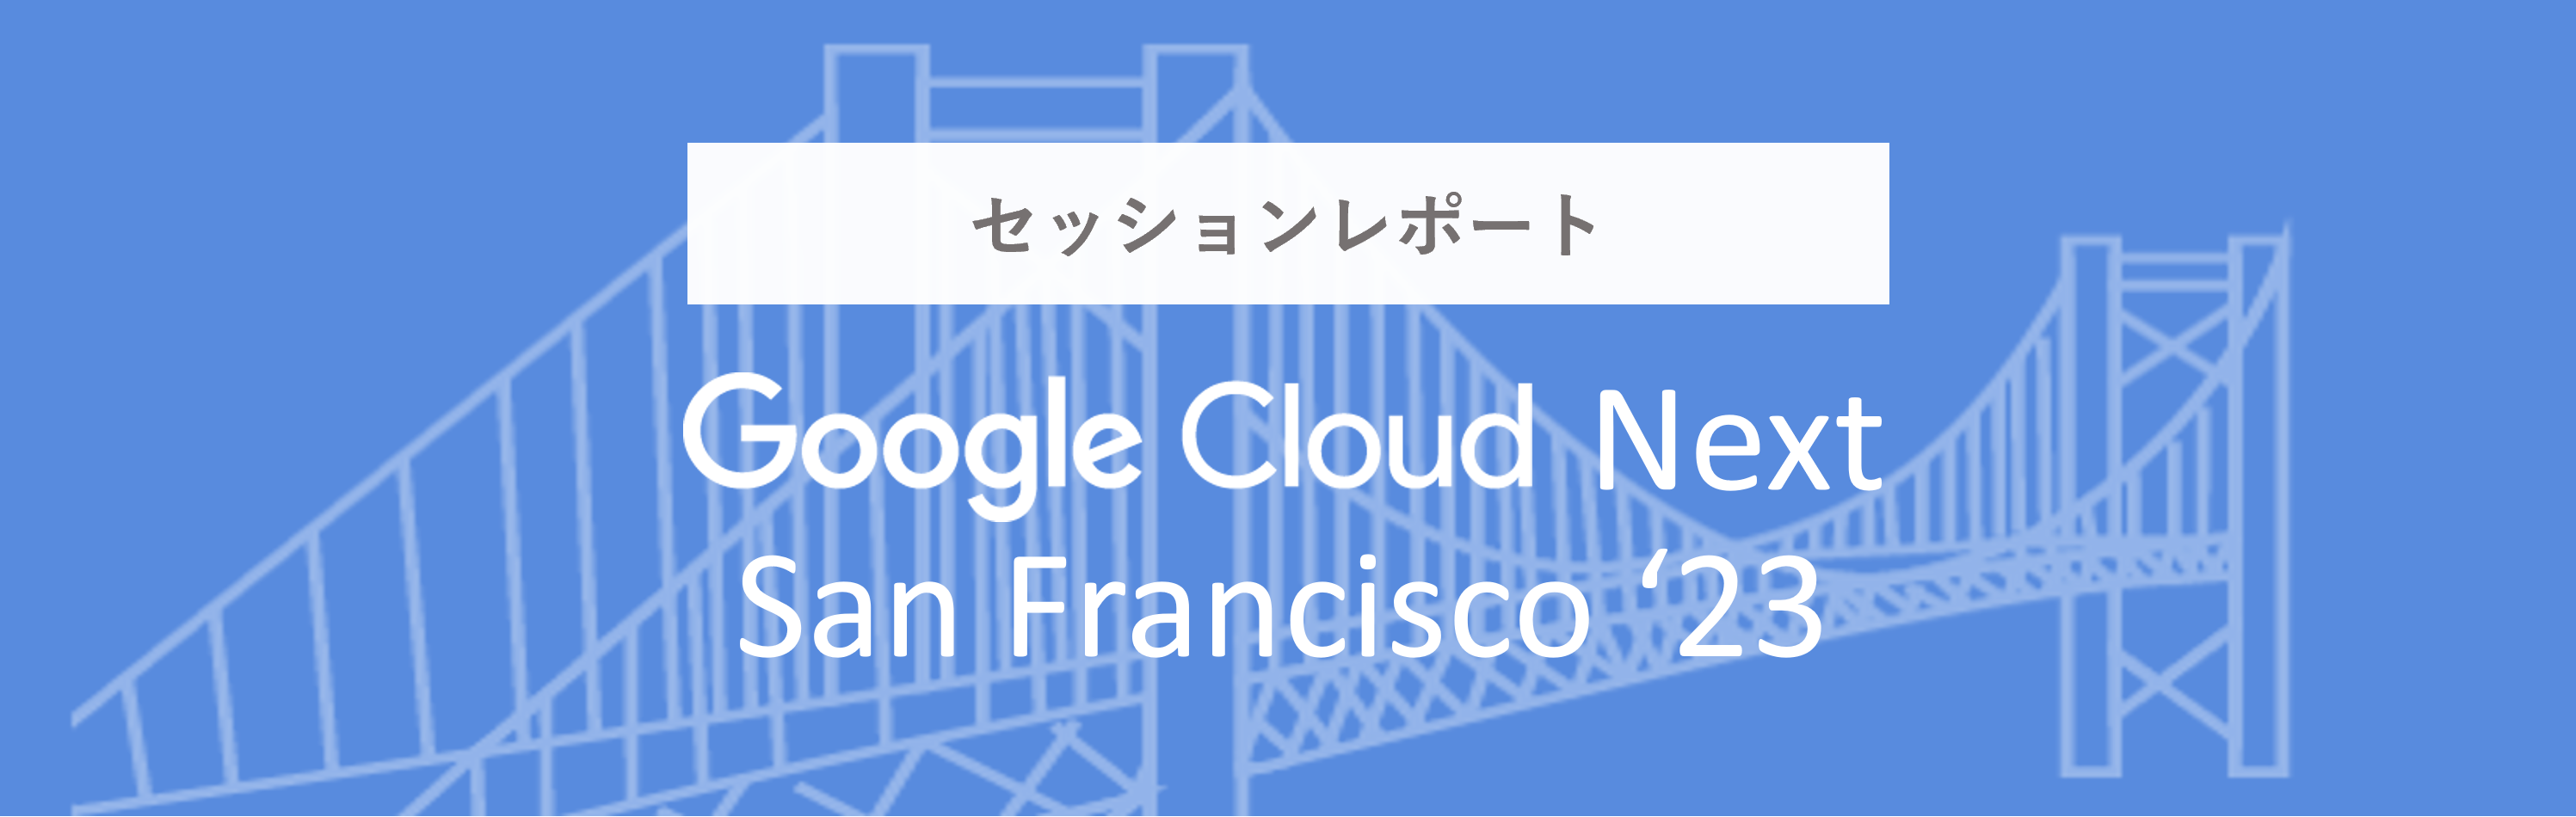 Google Cloud Next San Francisco ’23 現地レポート